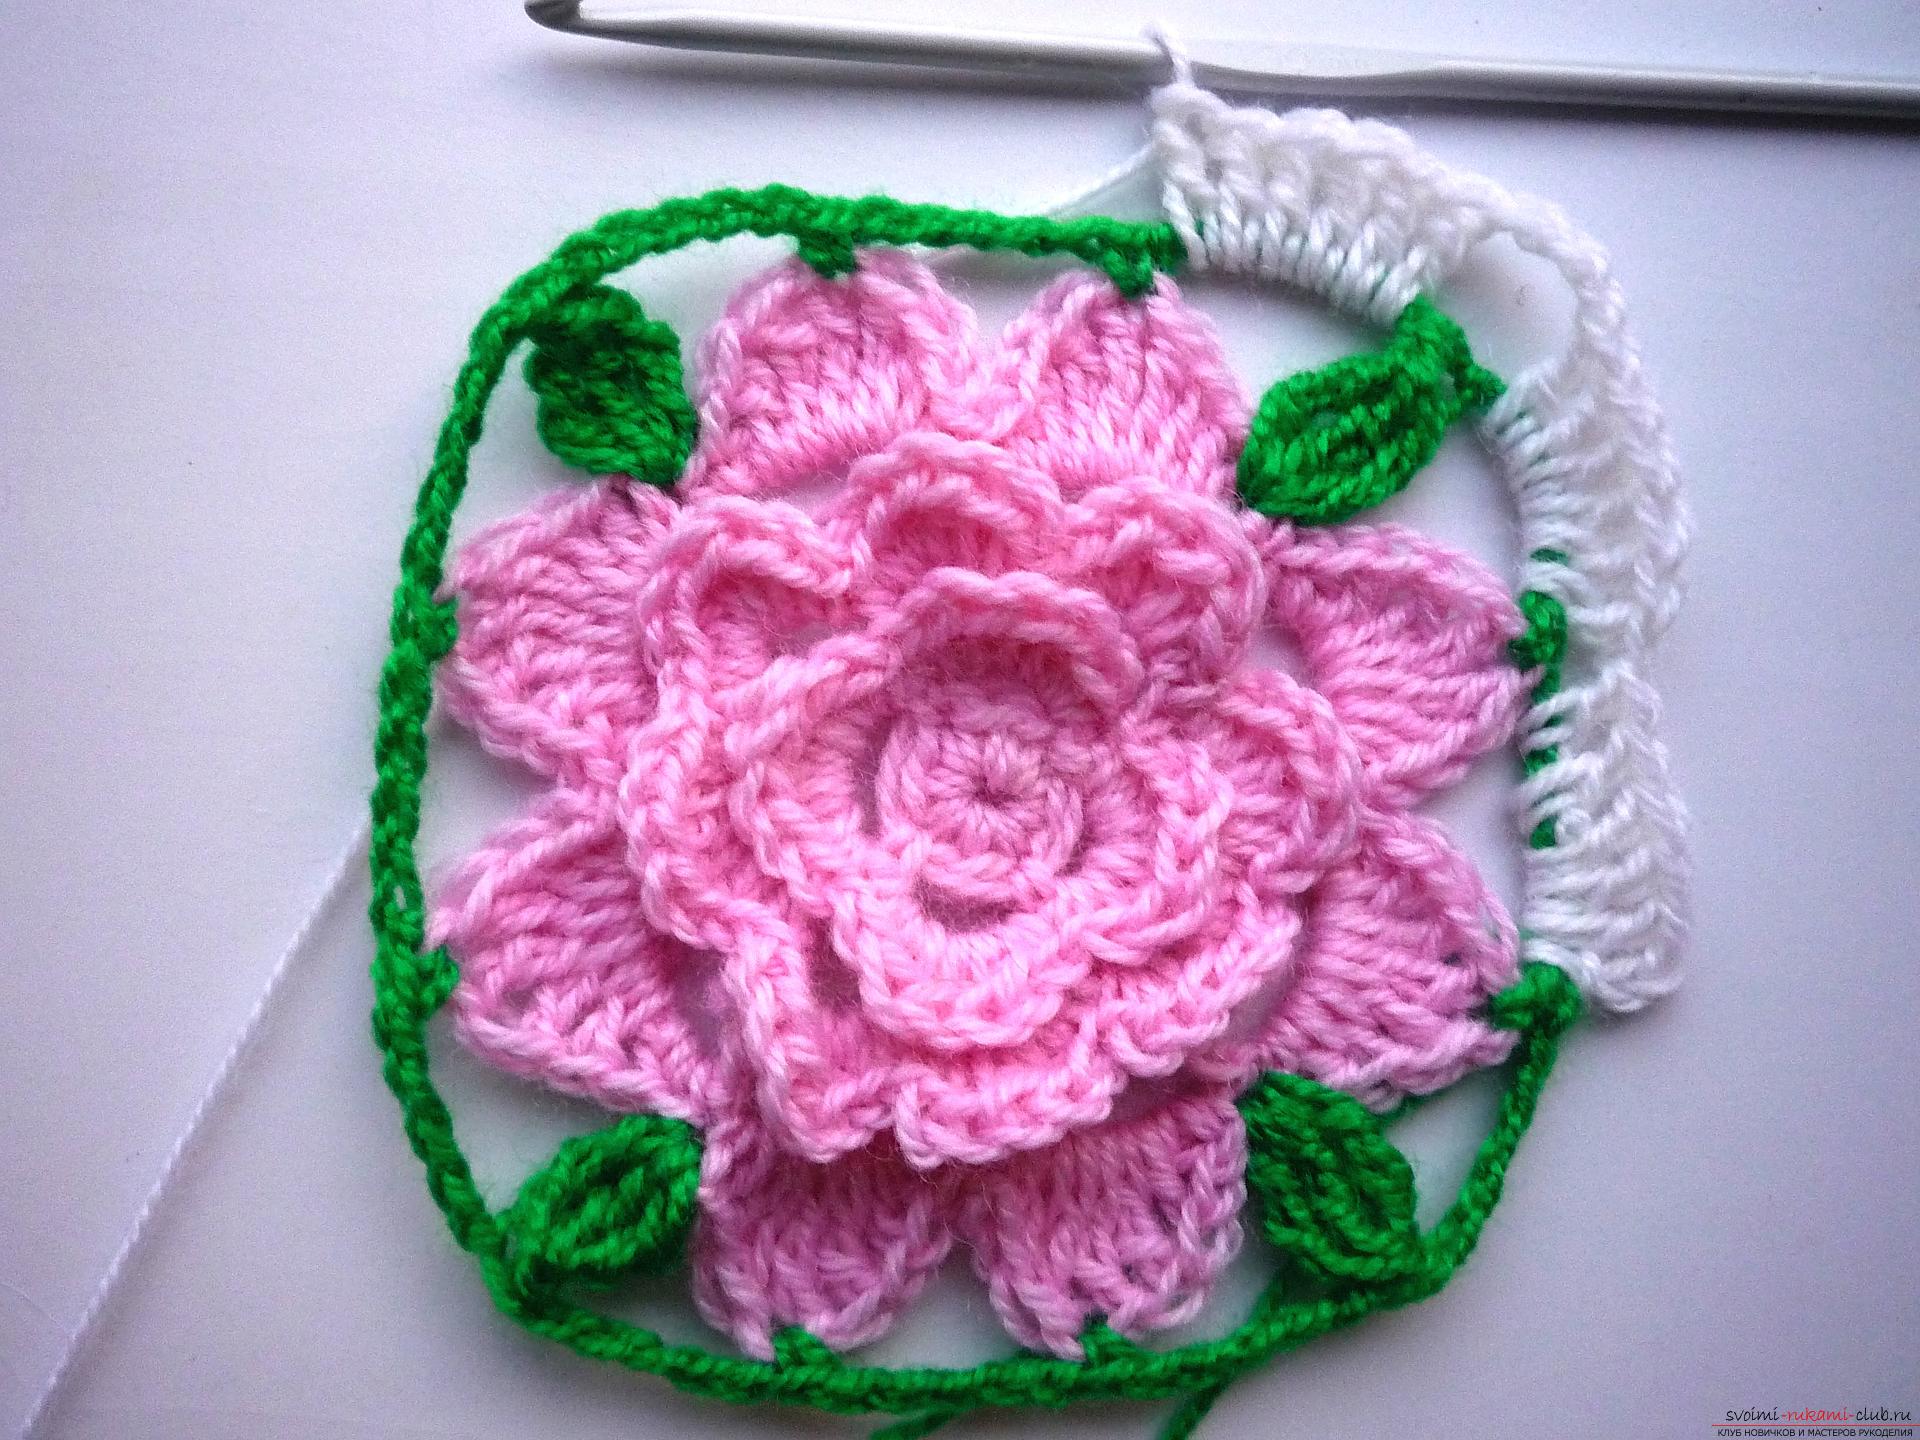 This crochet masterclass contains a crochet color scheme for the plaid .. Photo №19